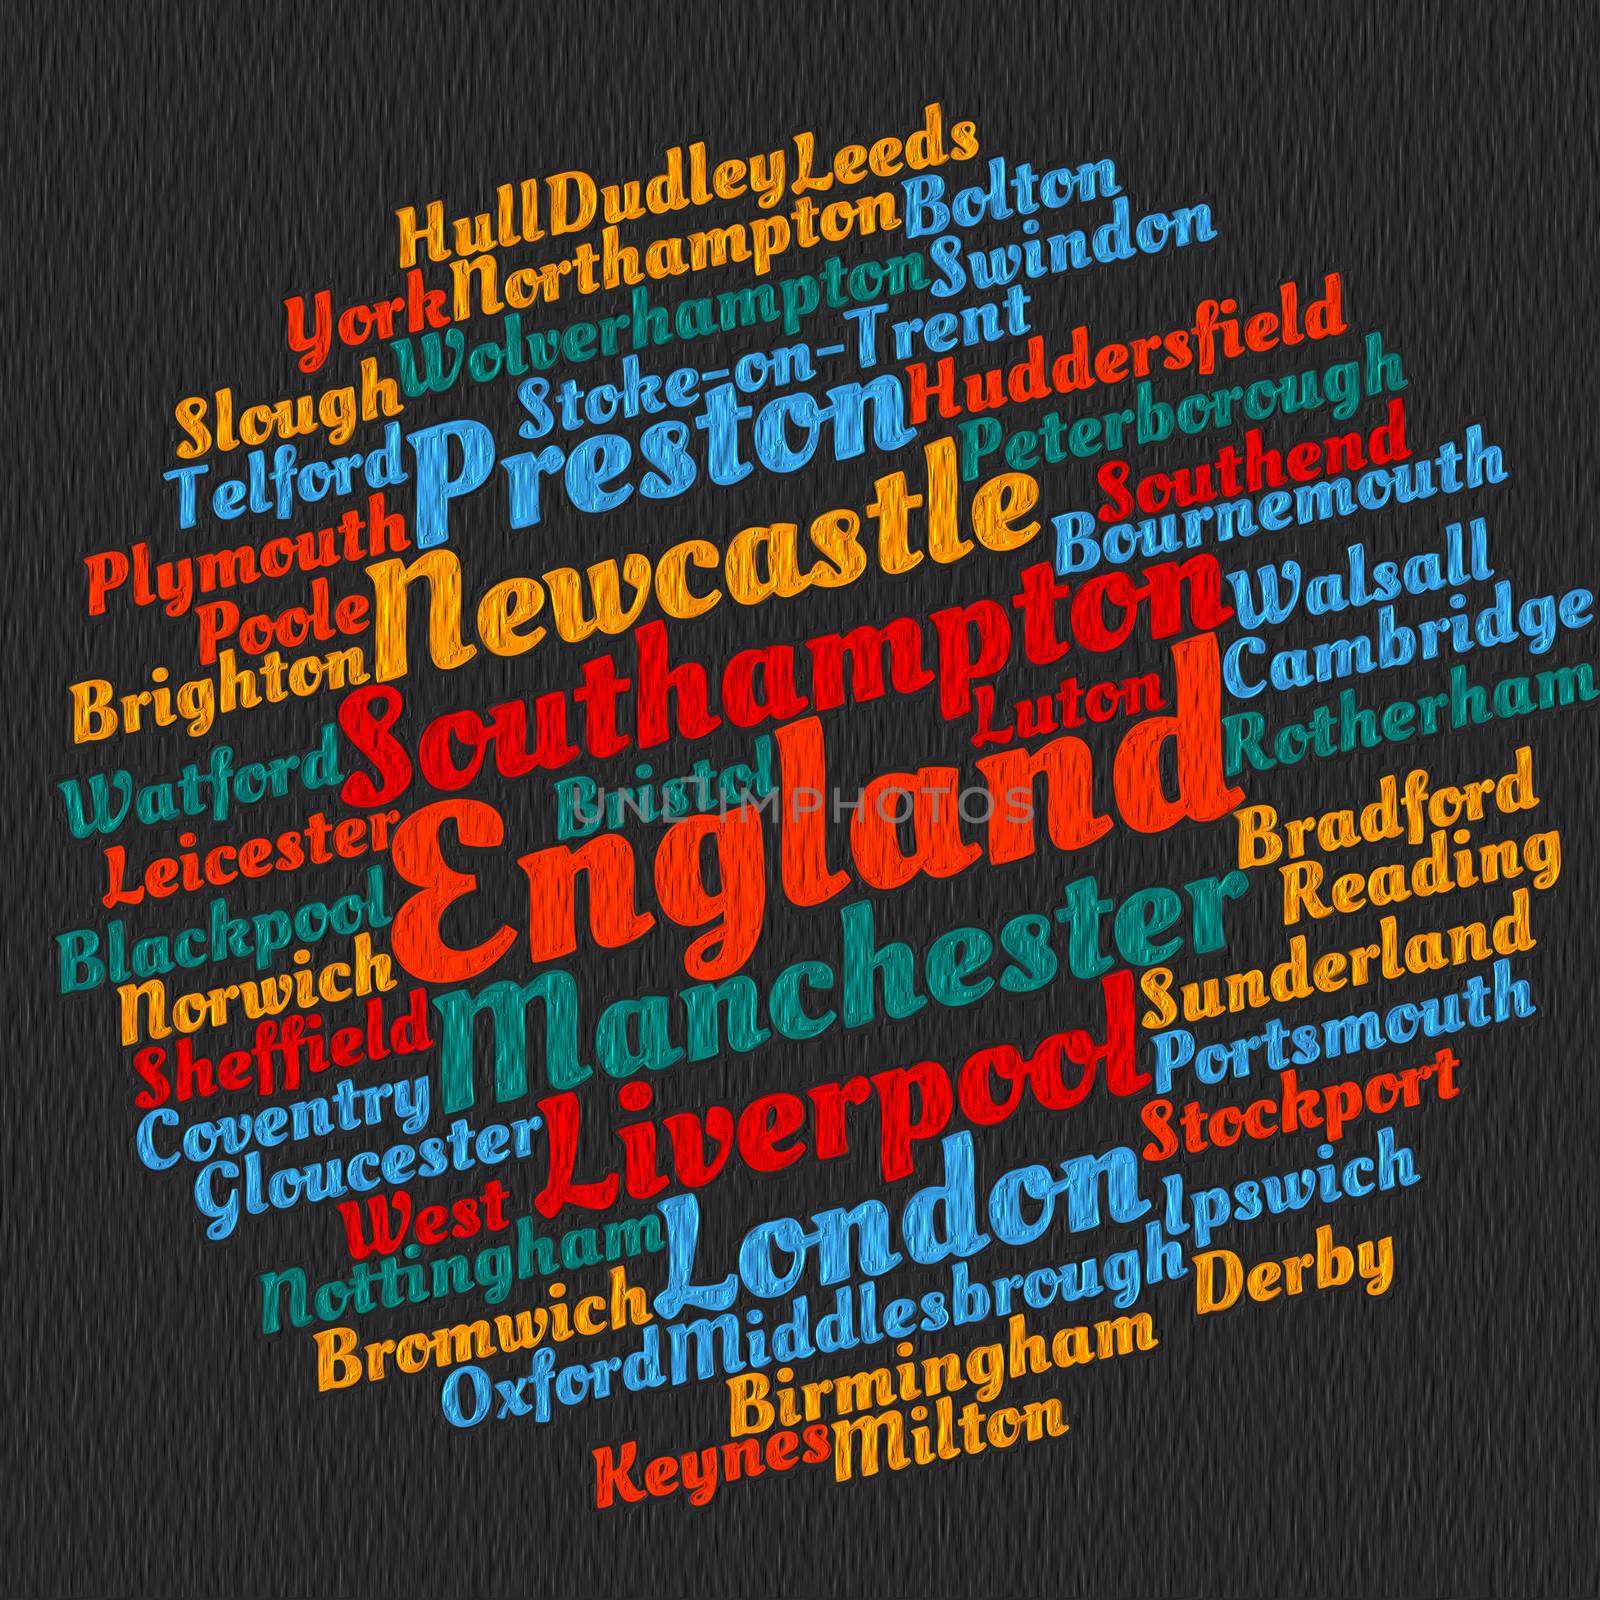 Localities in England by eenevski